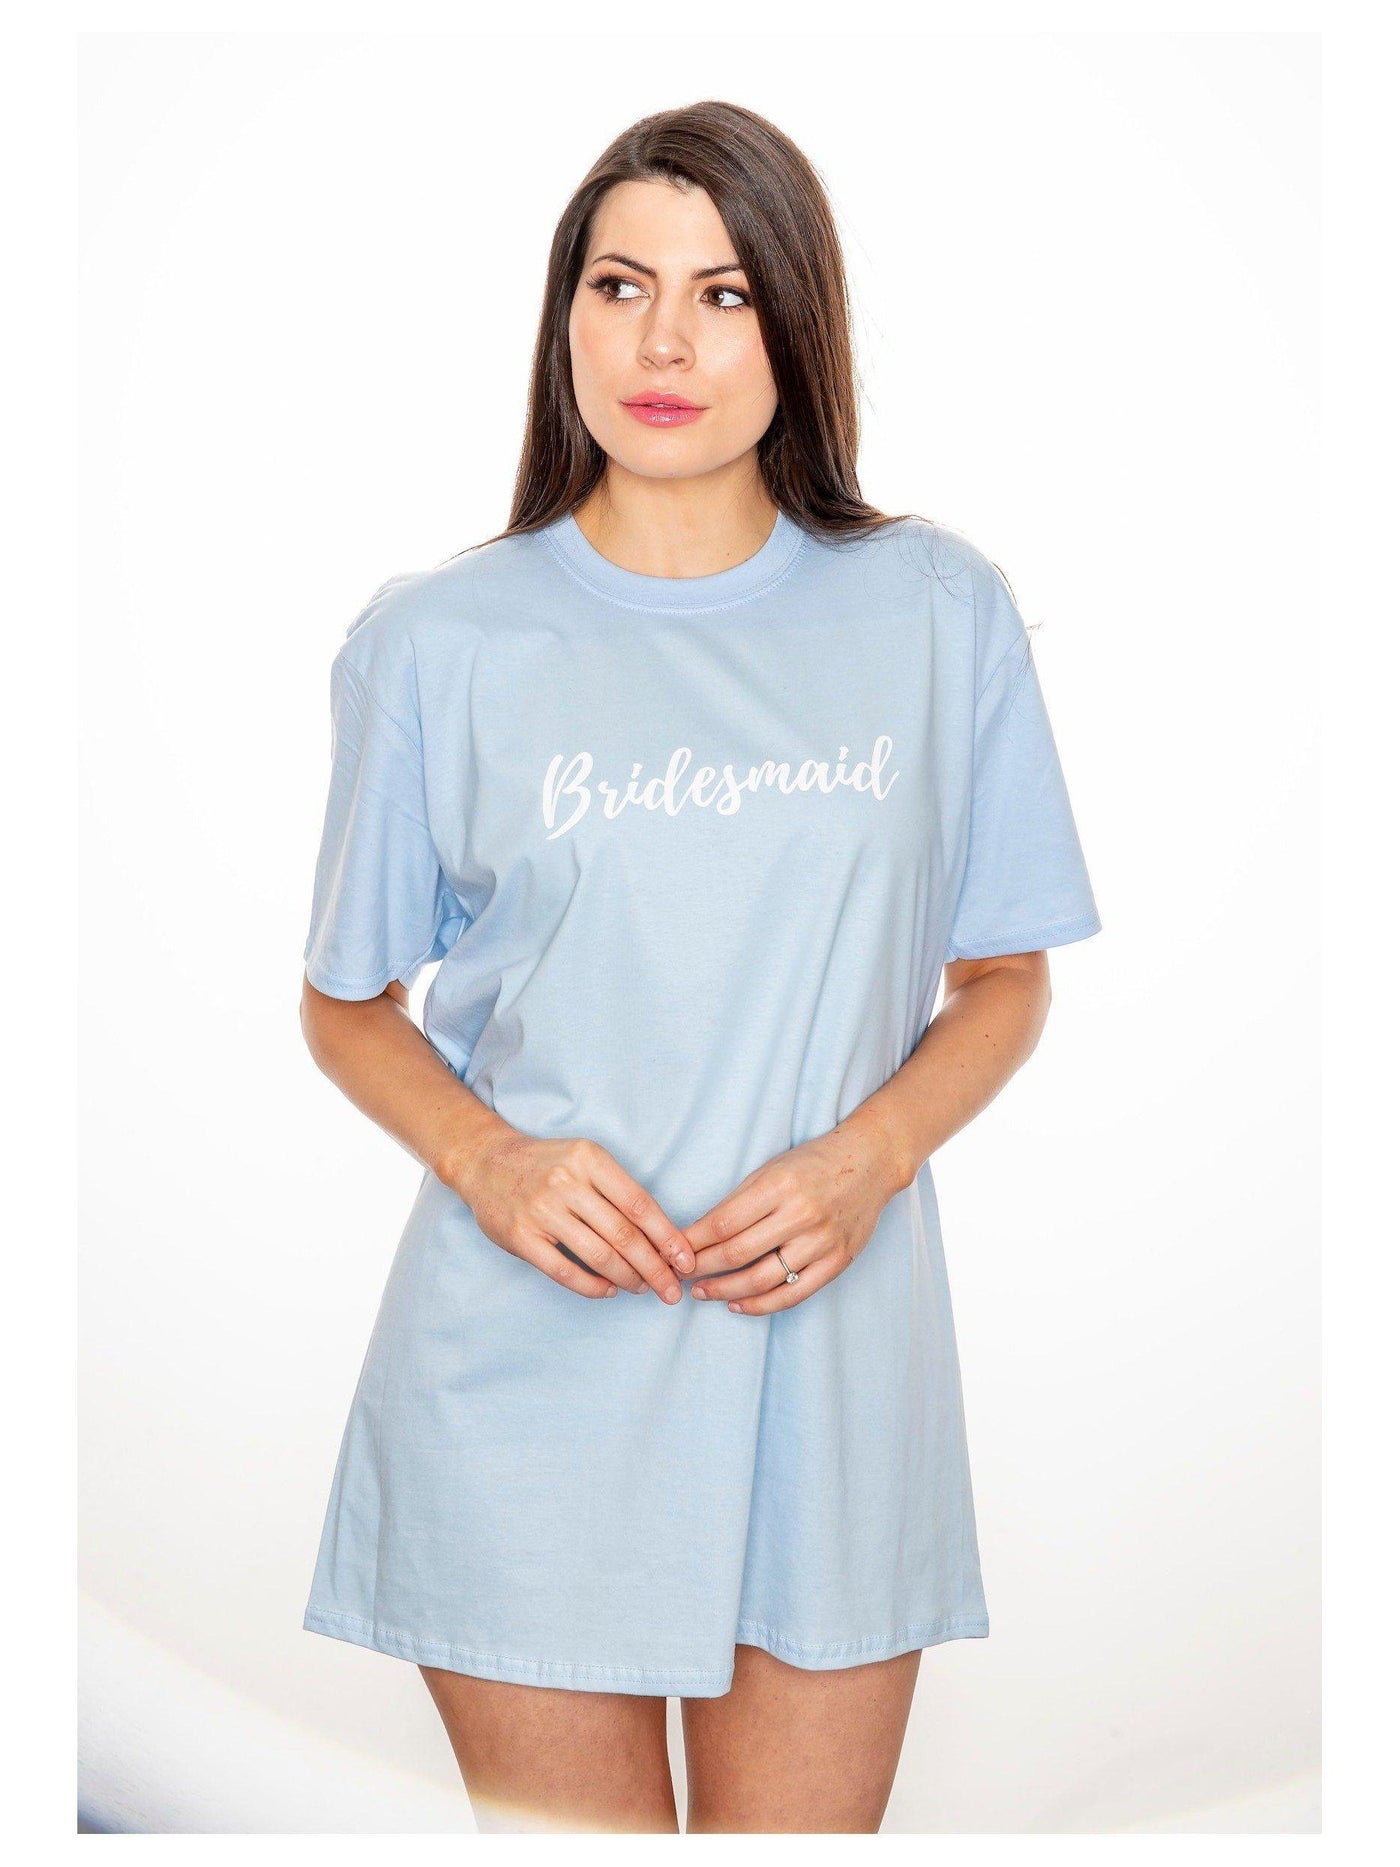 BRIDESMAID pyjamas | personalised sleep shirt